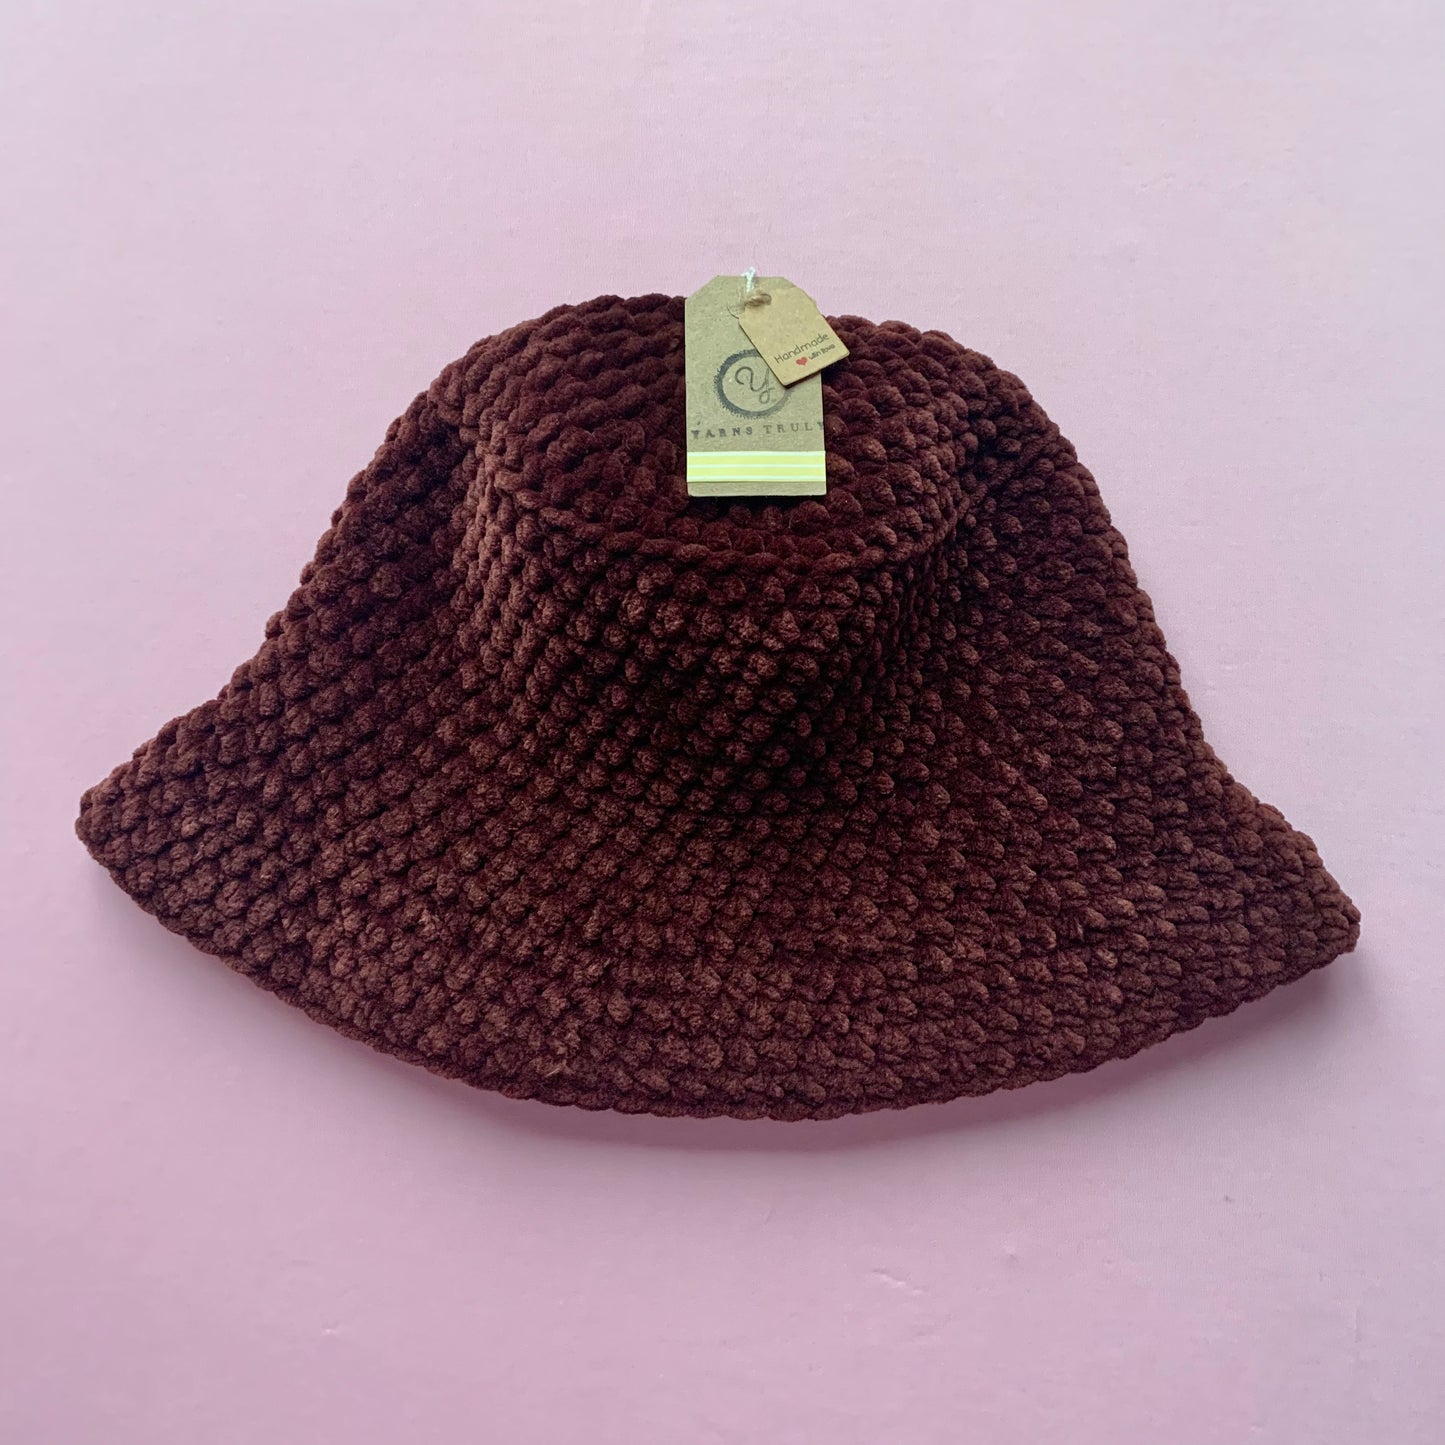 Handmade crushed velvet crochet bucket hat in brown